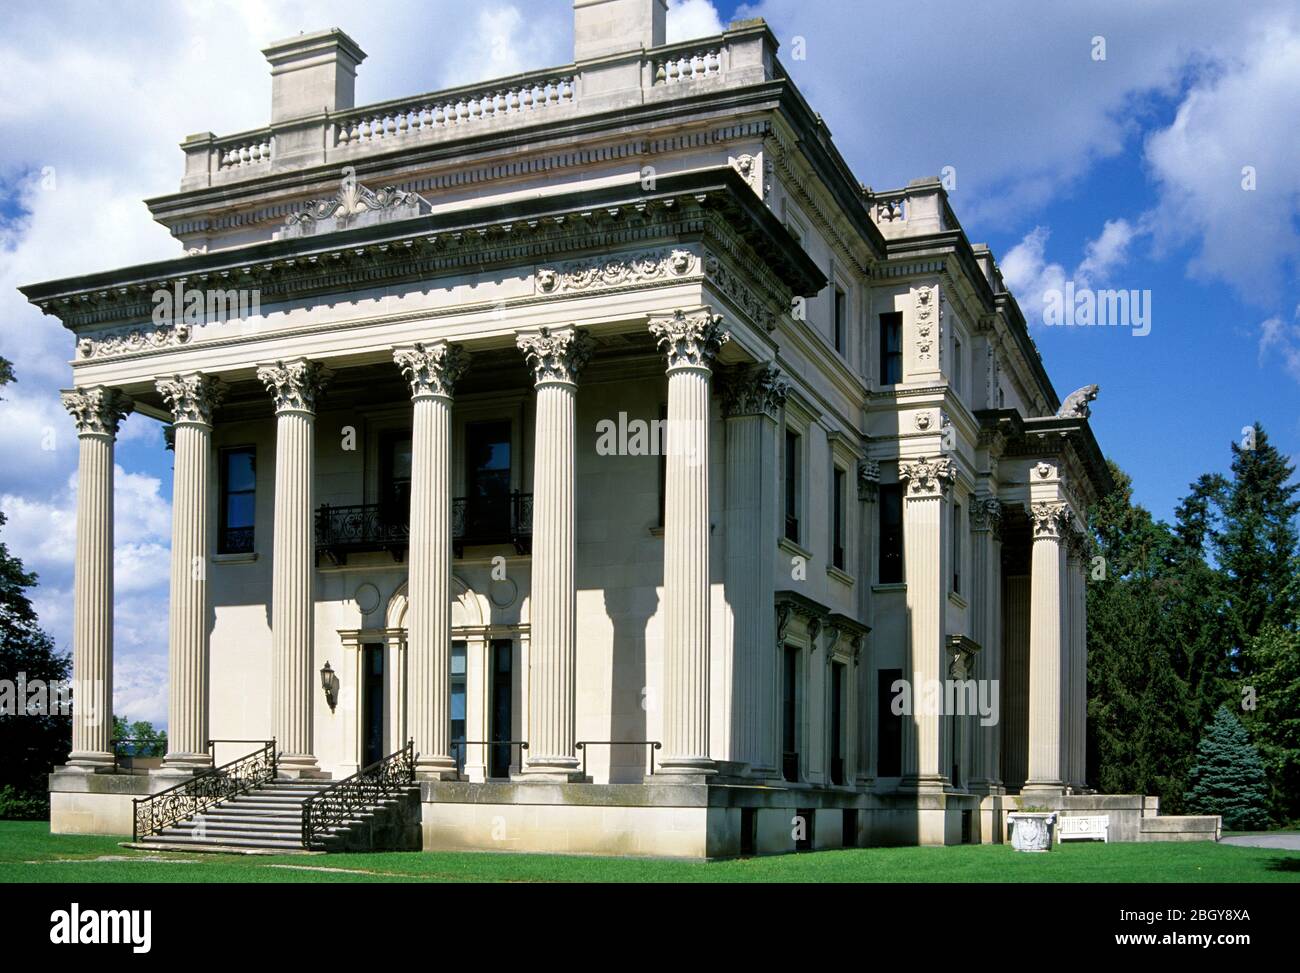 Vanderbilt Mansion, Vanderbilt Mansion National Historic Site, New York Stock Photo